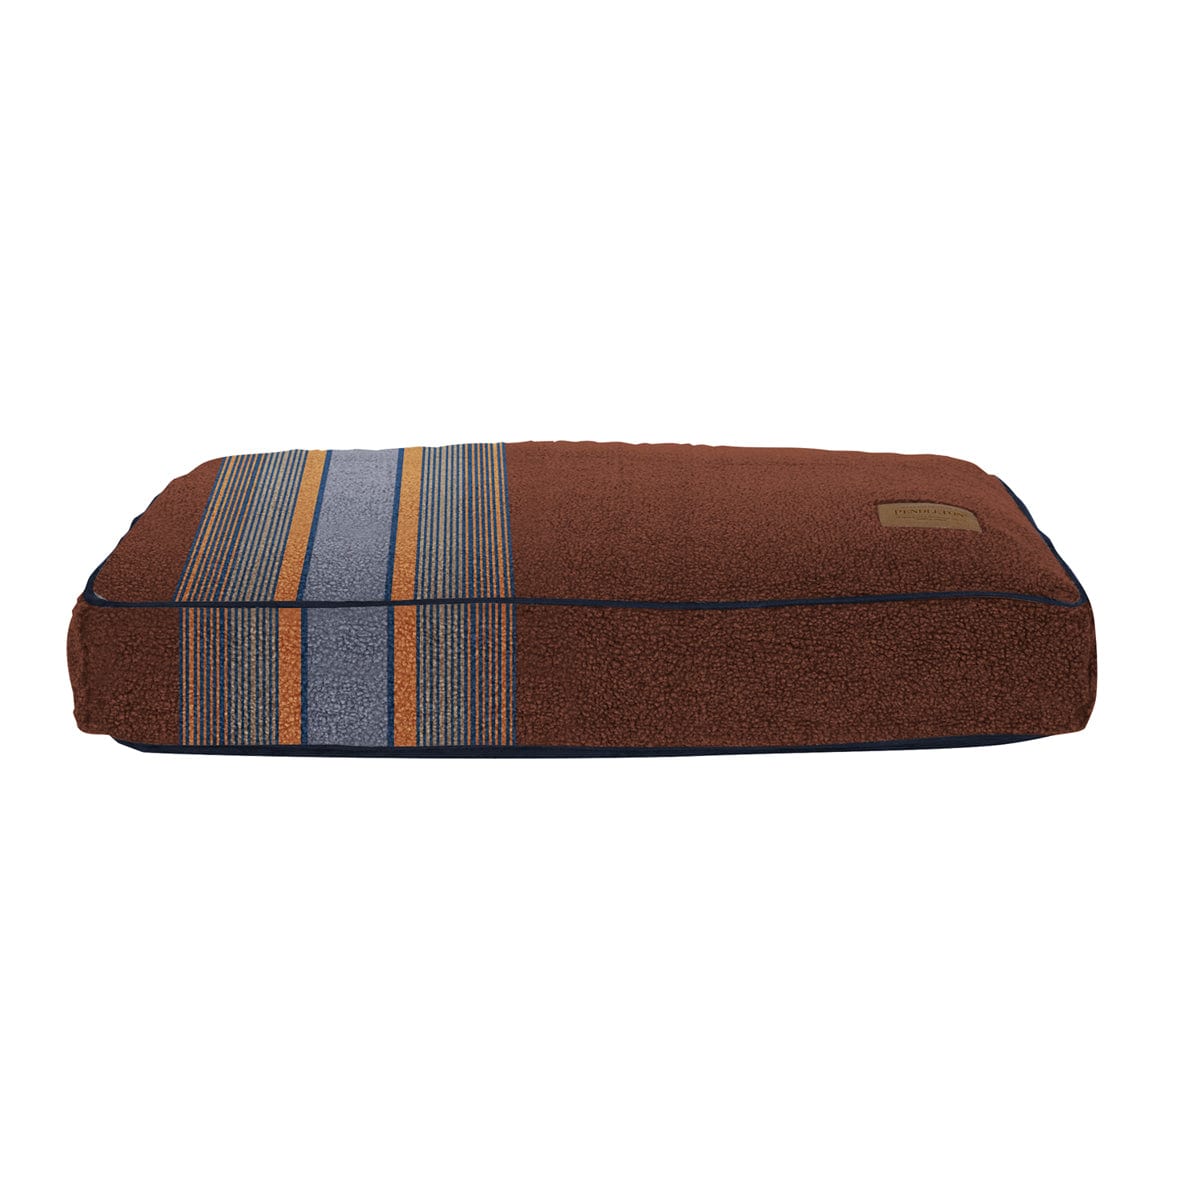 Pendelton-Pet Chocolate striped dog bed